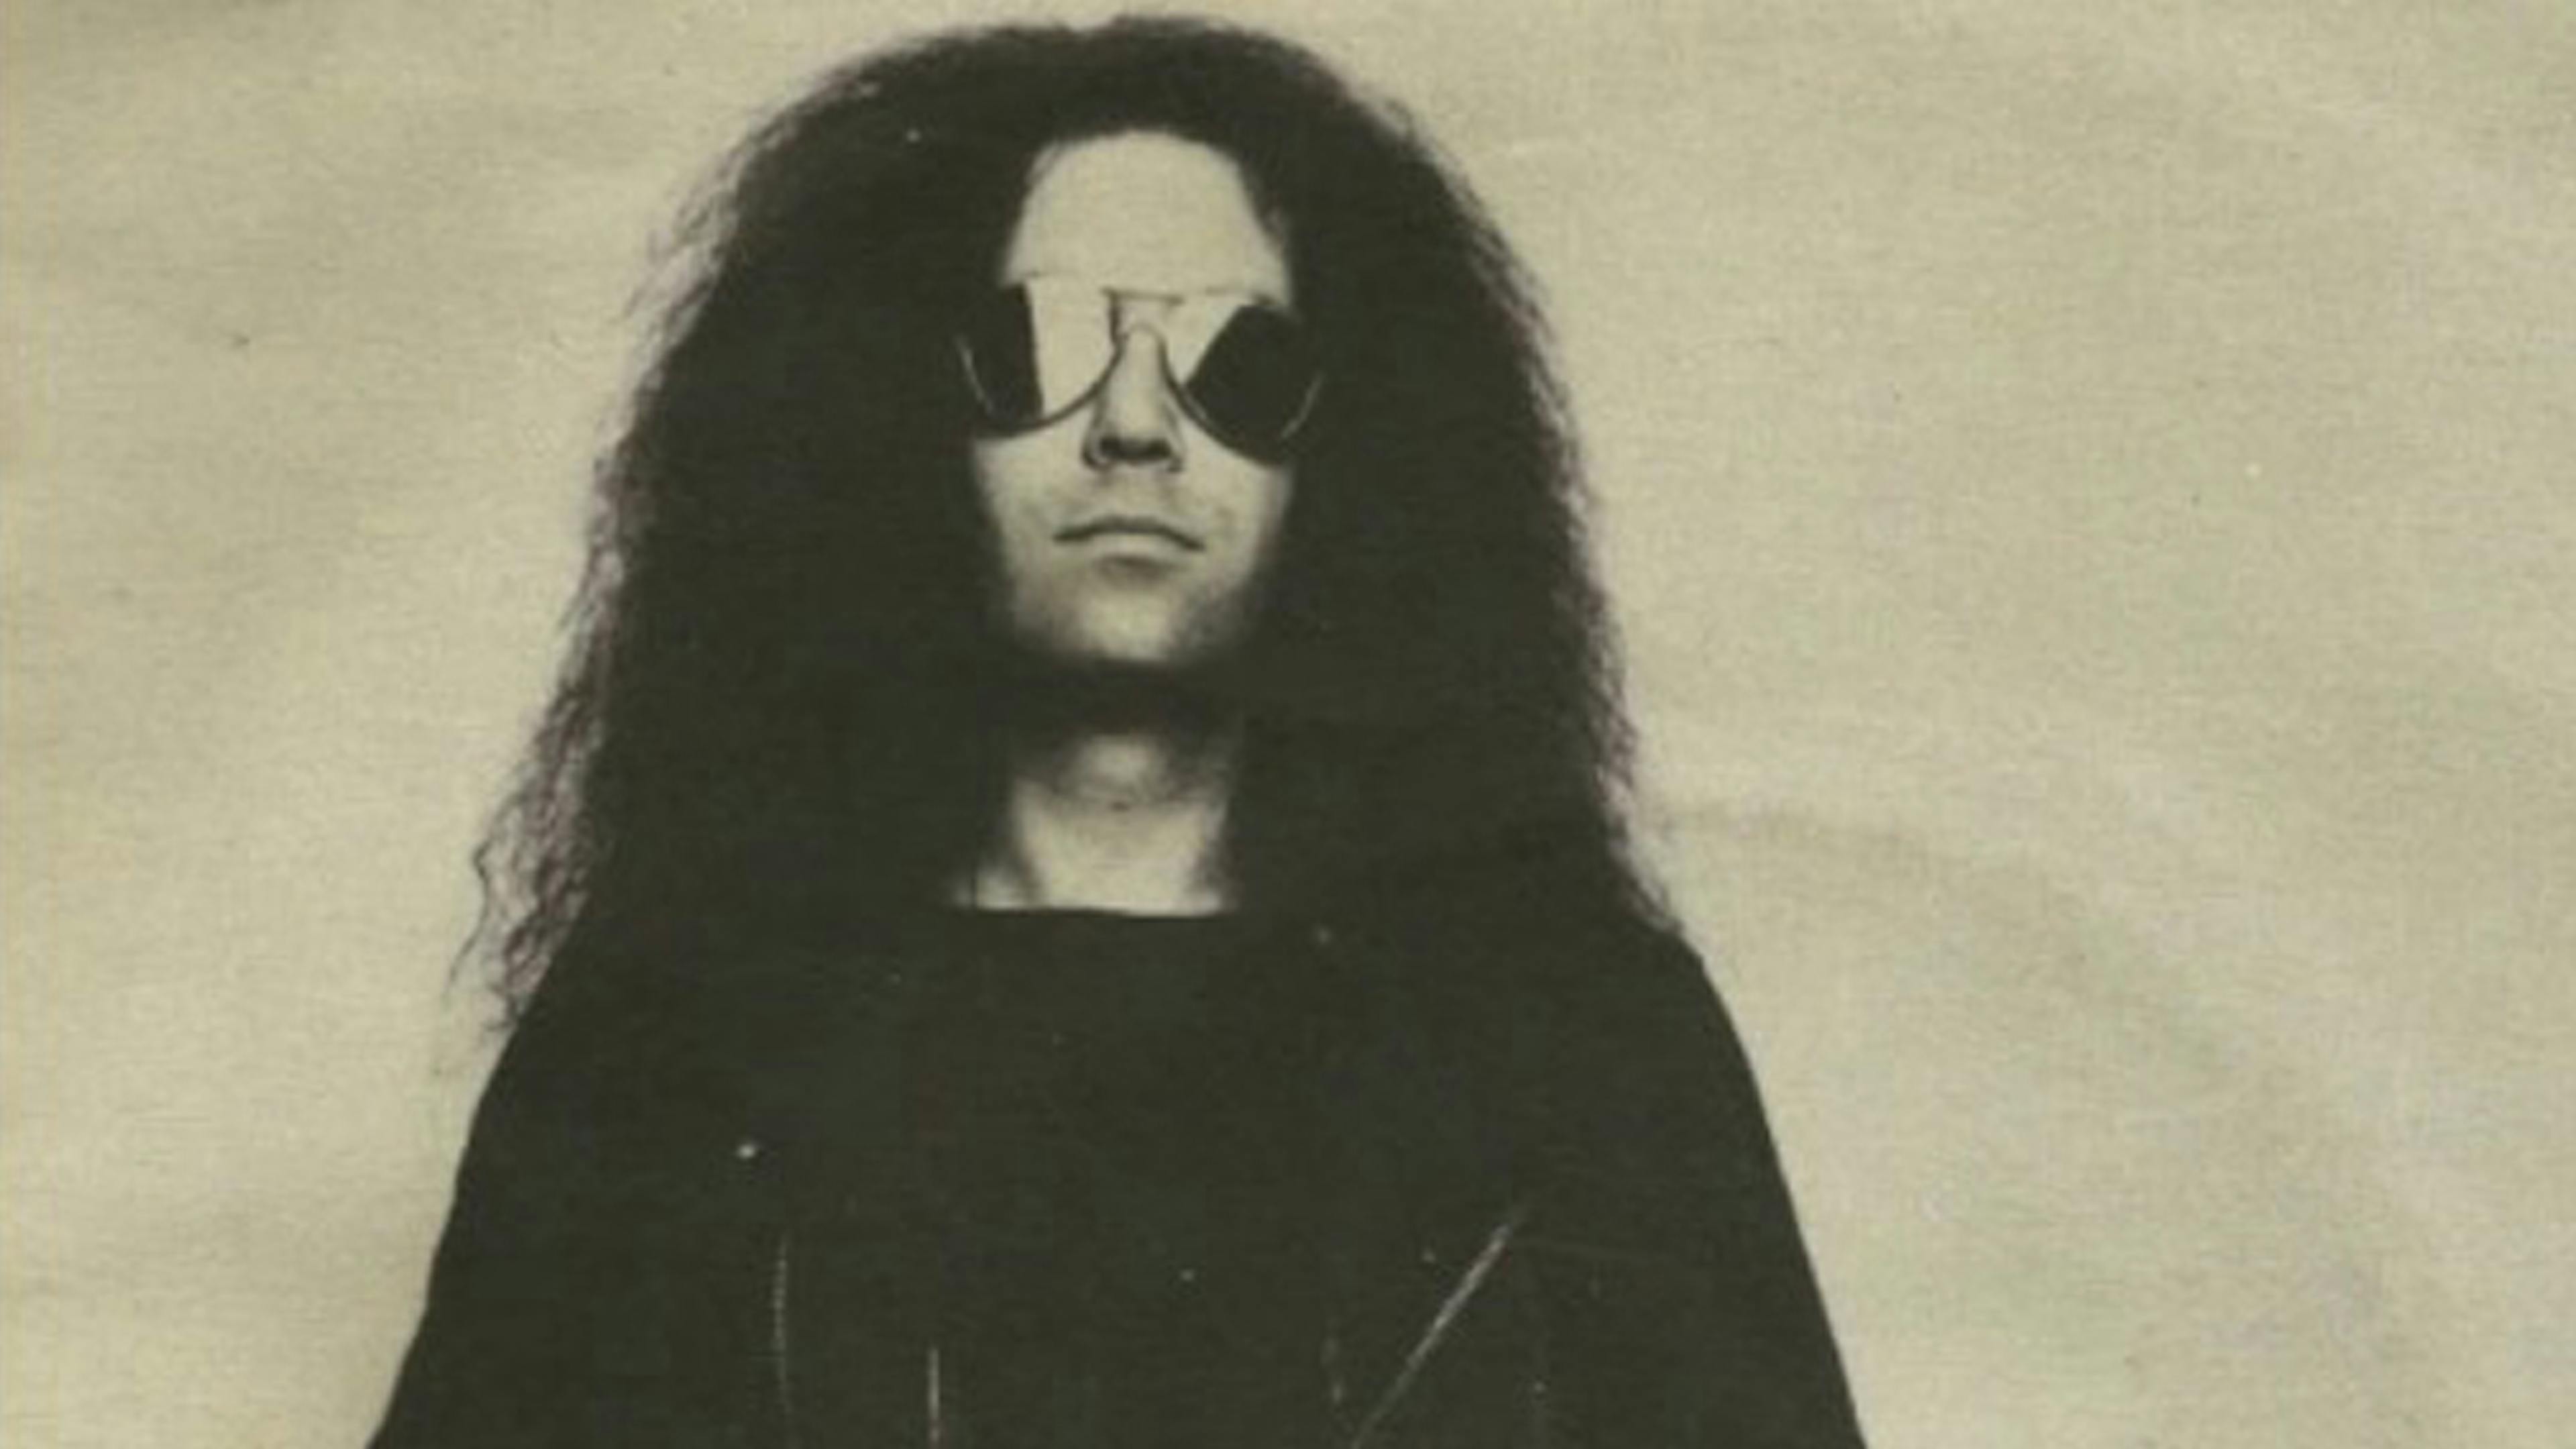 Original Motörhead Guitarist Larry Wallis Has Died At The Age Of 70